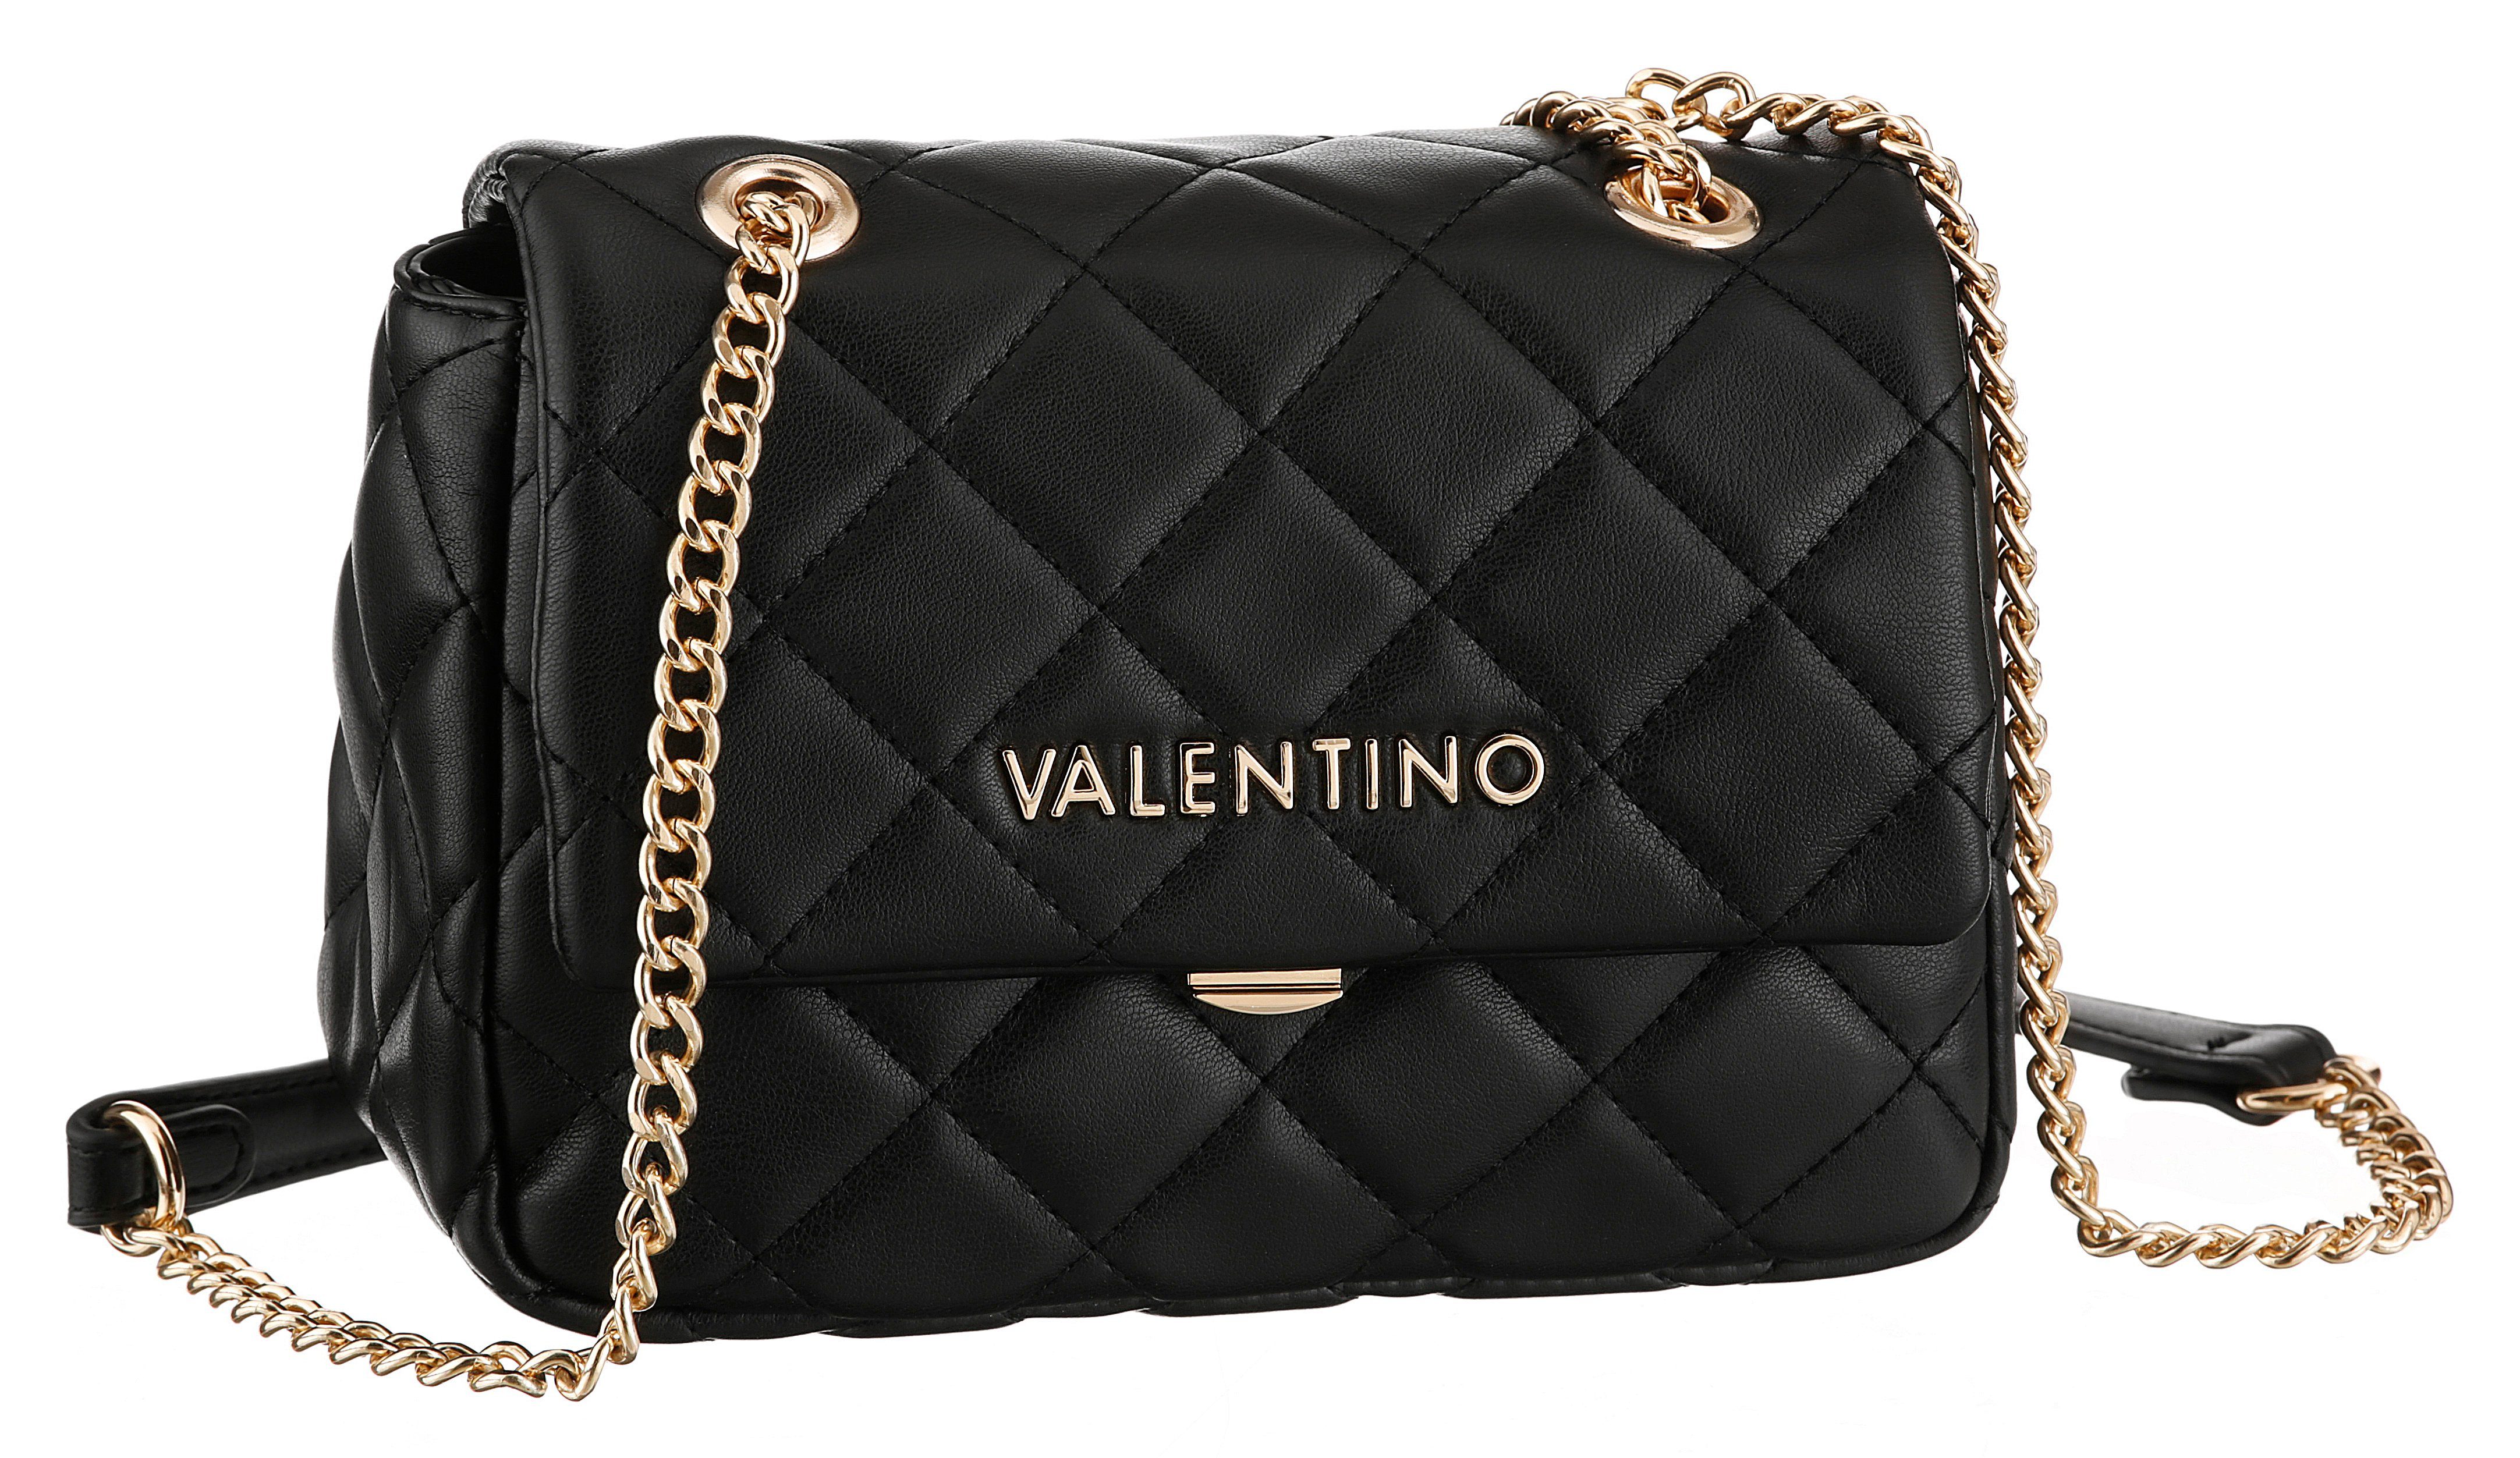 VALENTINO BAGS Handtasche »Ocarina Pattina K05«, Schultertasche